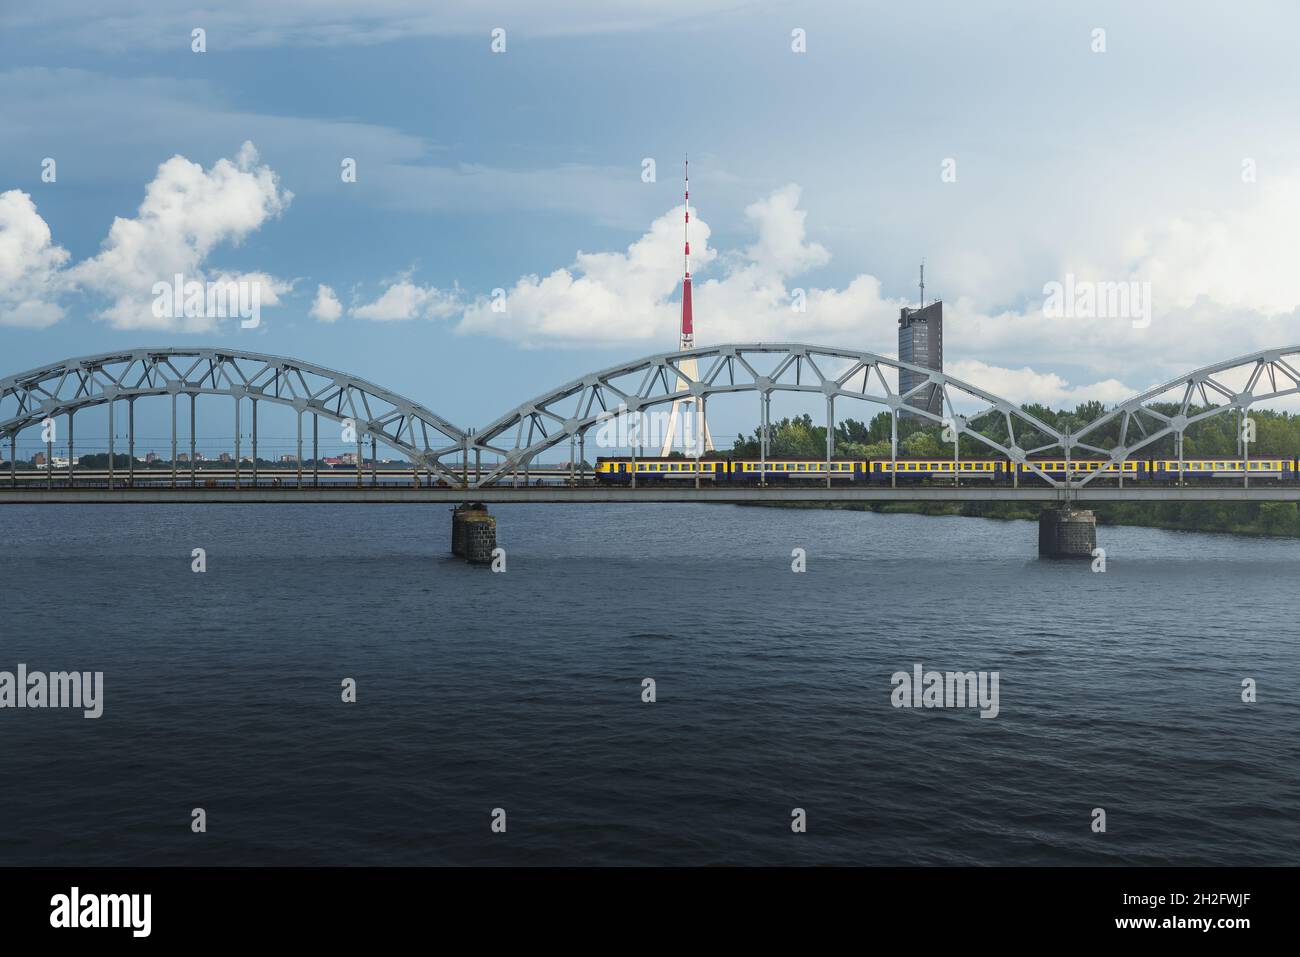 Eisenbahnbrücke und Radio- und Fernsehturm Riga - Riga, Lettland Stockfoto